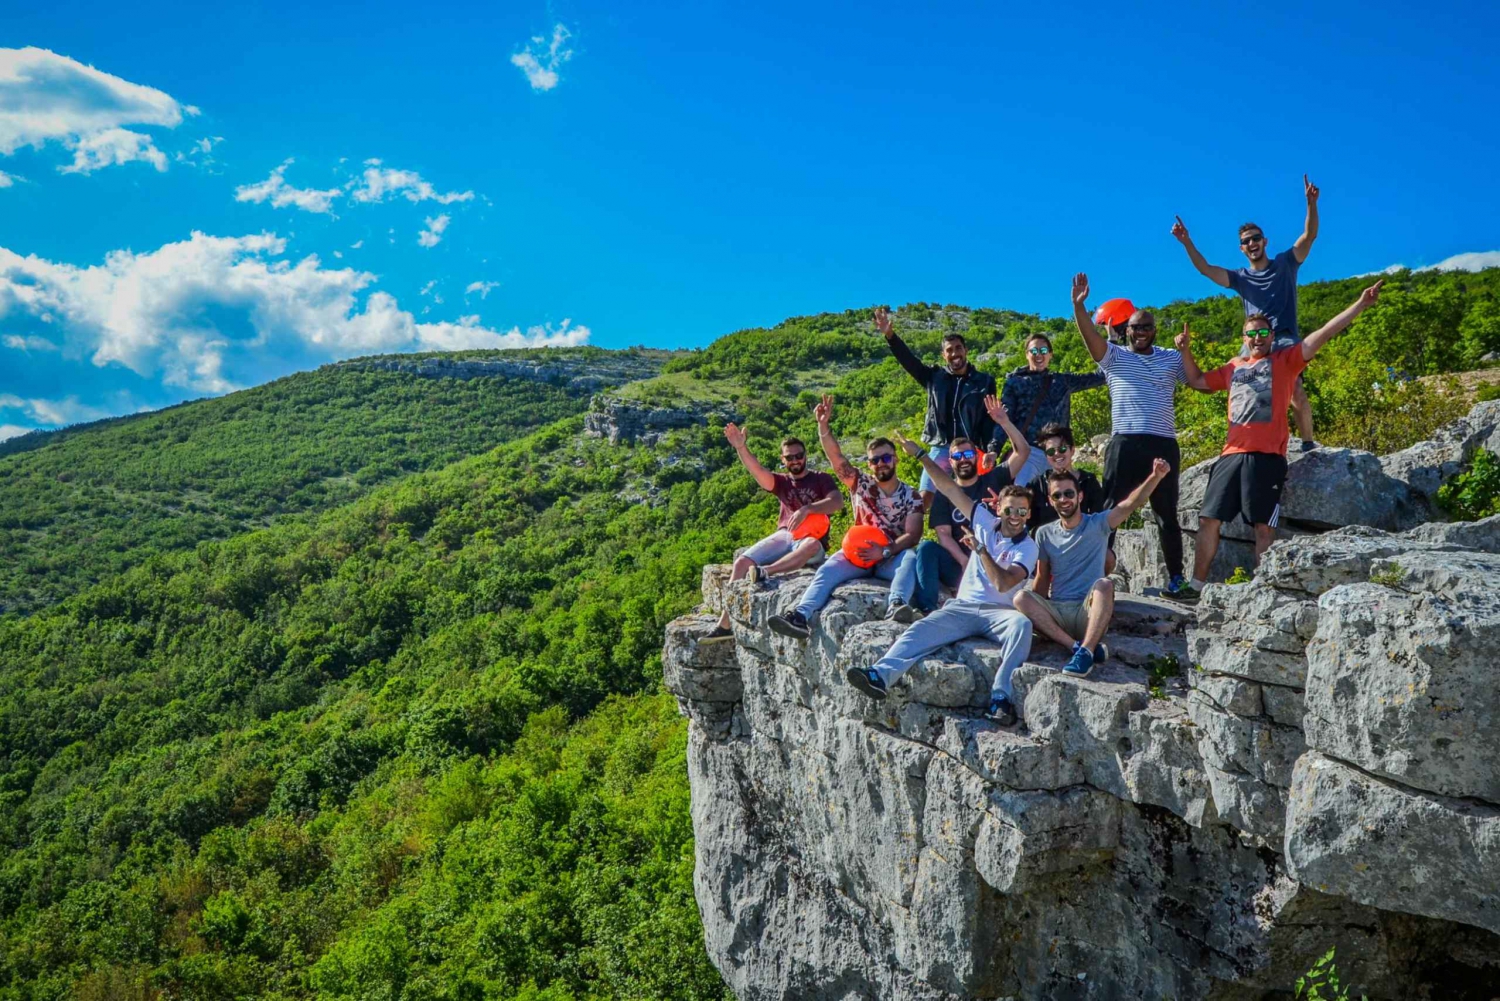 From Split: ATV Quad Mountain Tour with Picnic